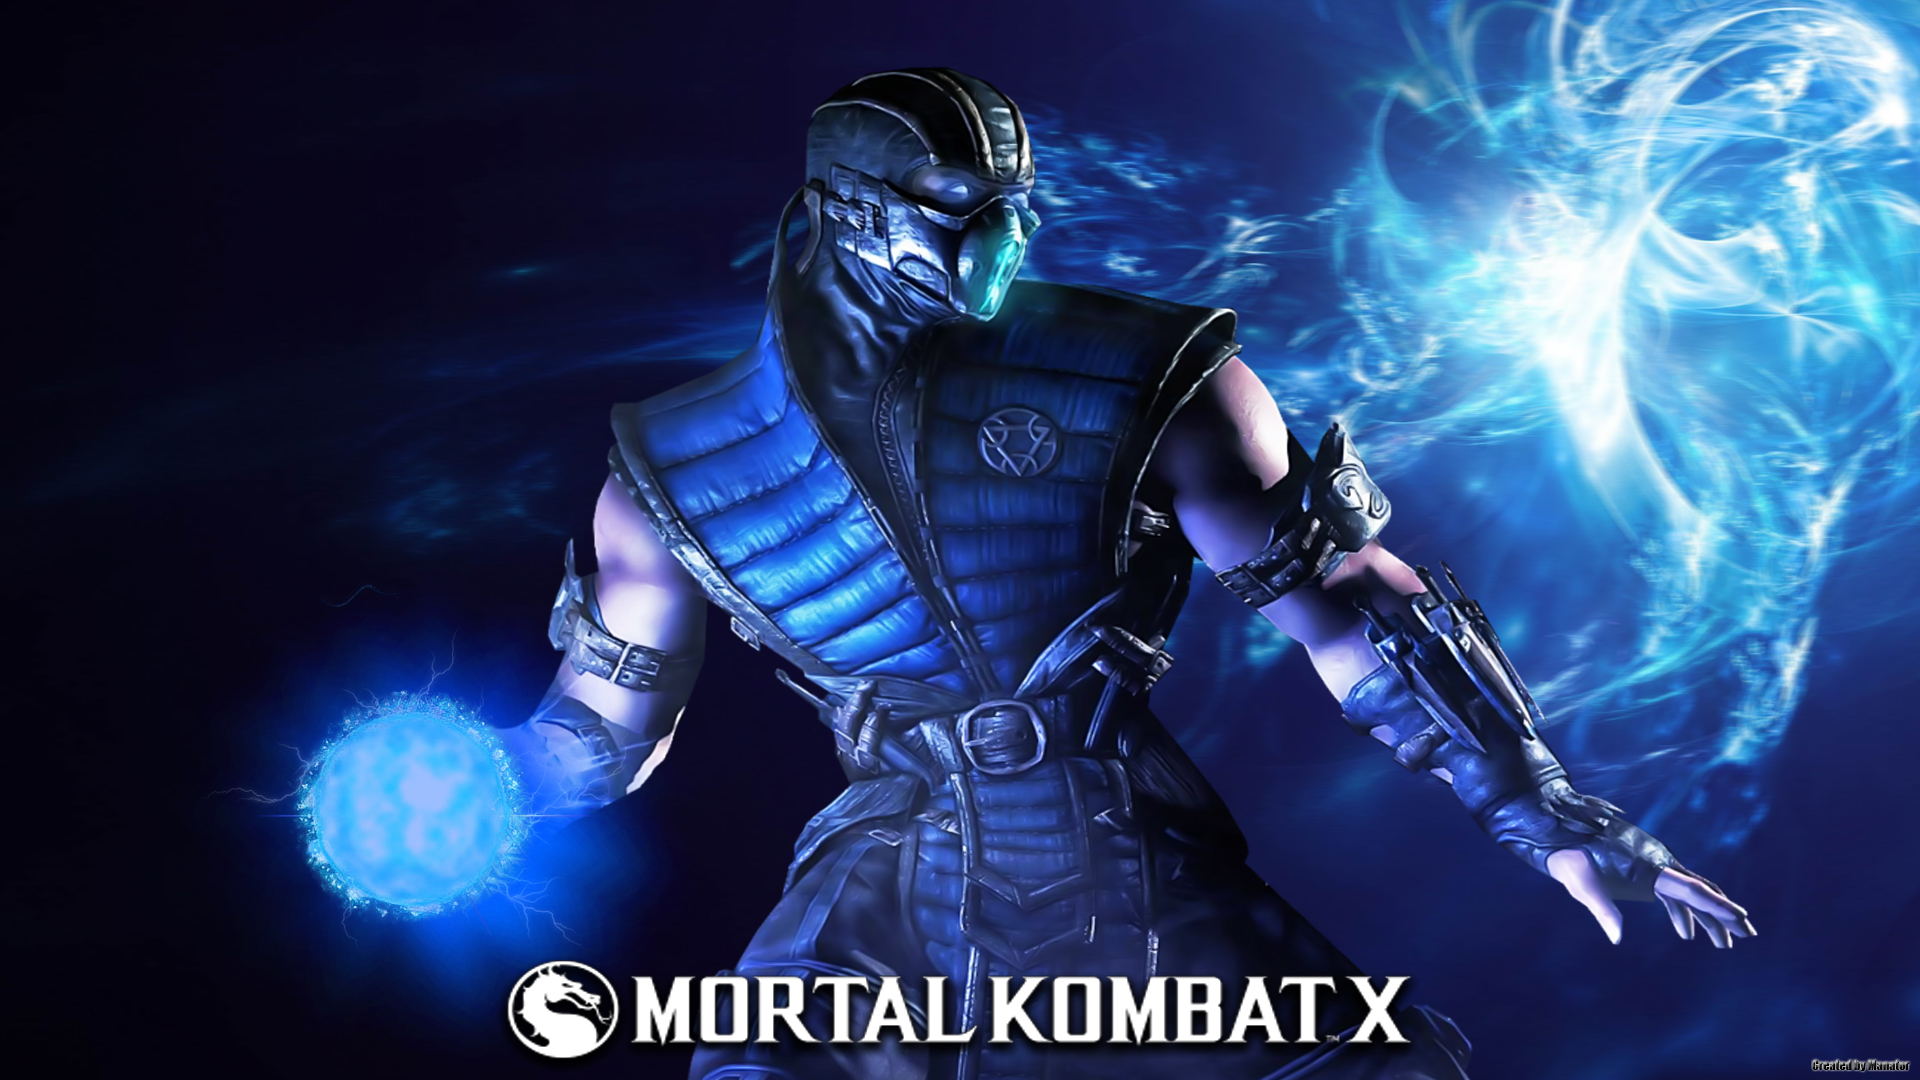 Мортал комбат столбик. Саб-Зиро Mortal Kombat 10. Саб Зиро мортал комбат 10. Саб-Зиро Mortal Kombat 1. Mortal Kombat 10 sub Zero.